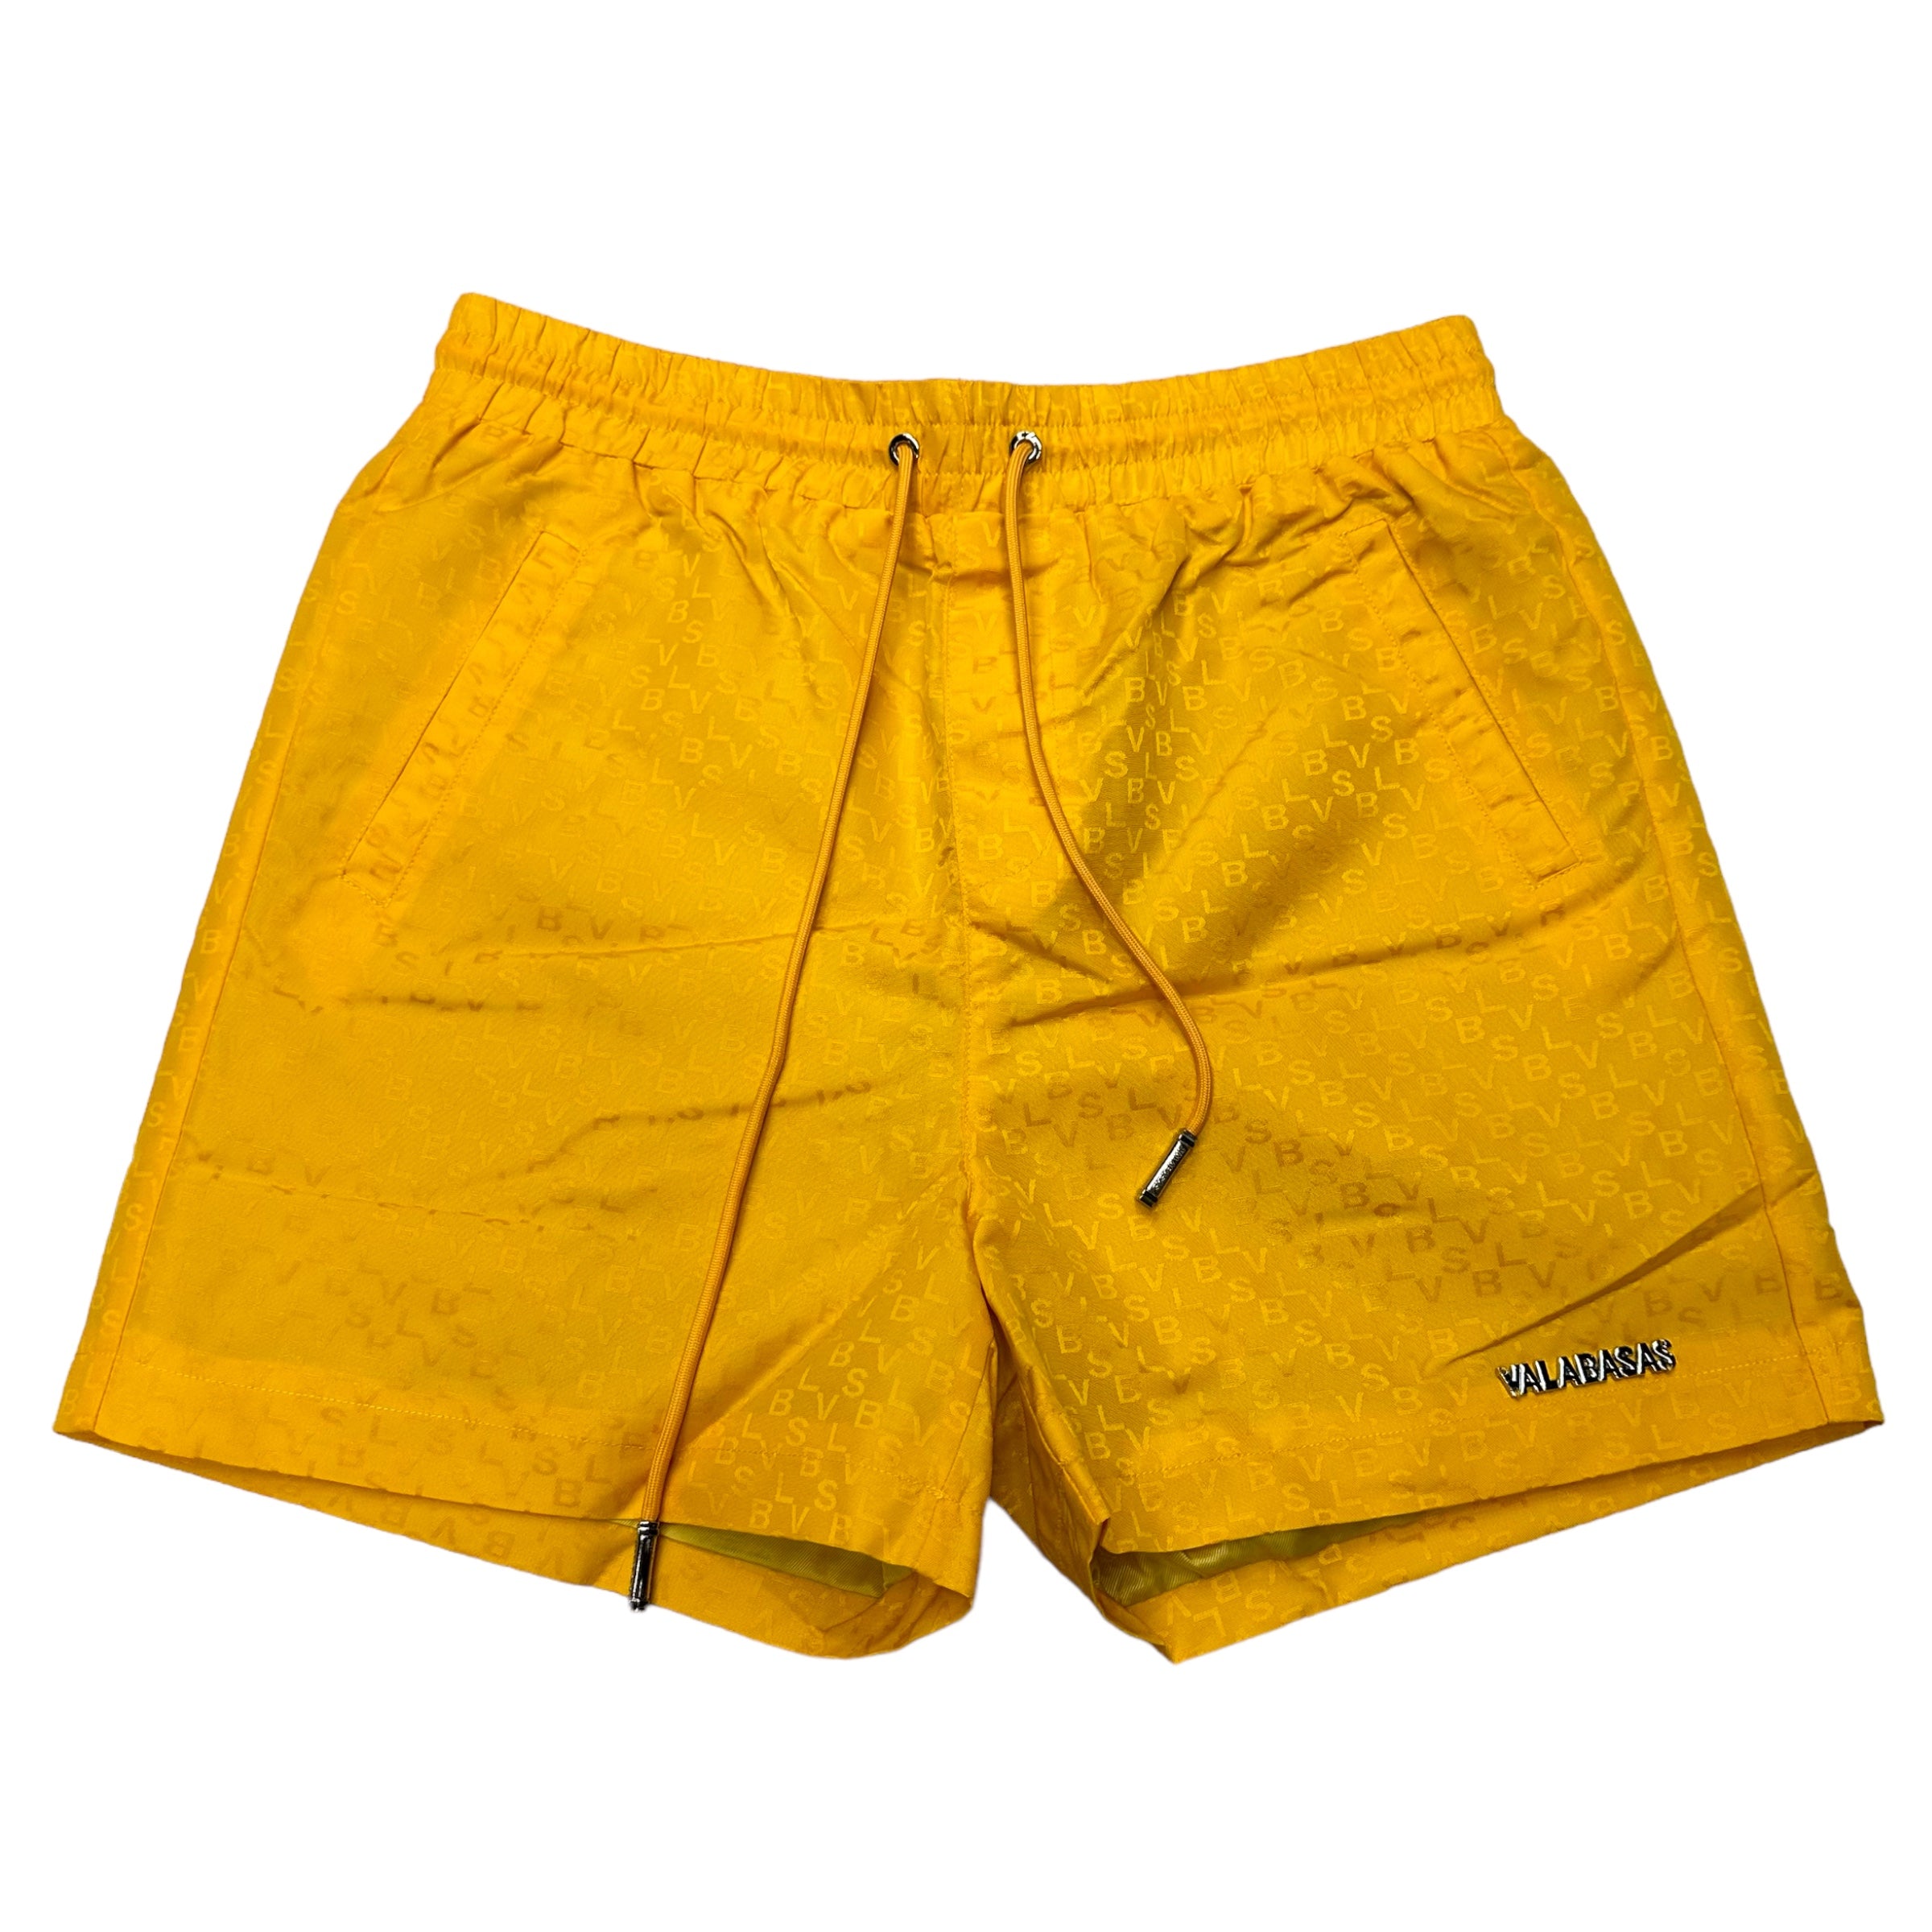 Valabasas Signature Script Nylon shorts Yellow 0235